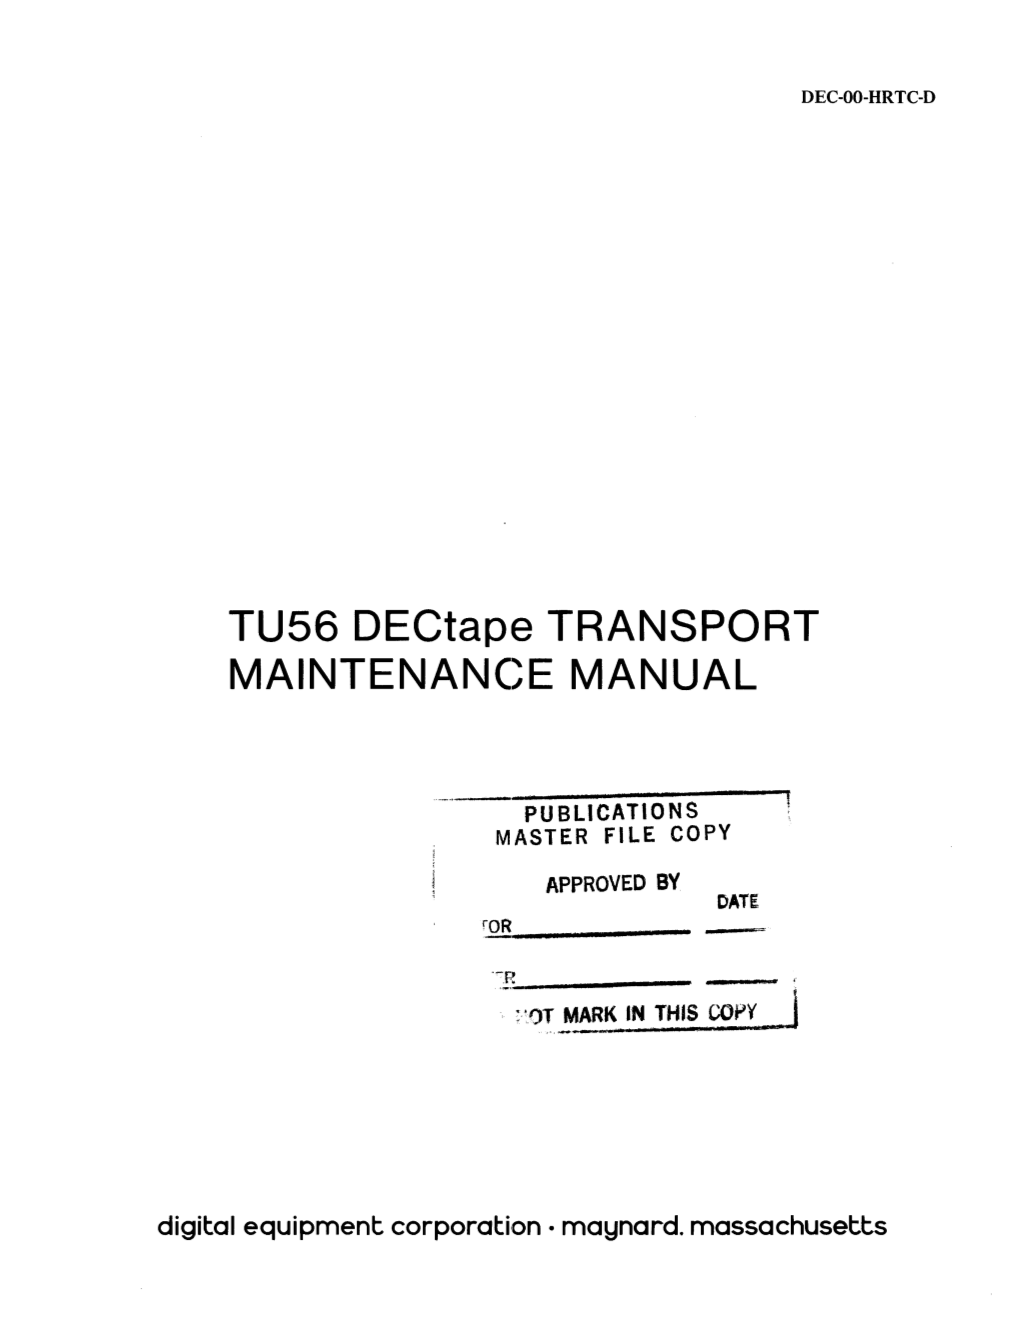 TU56 Dectape TRANSPORT MAINTENANC~E MANUAL